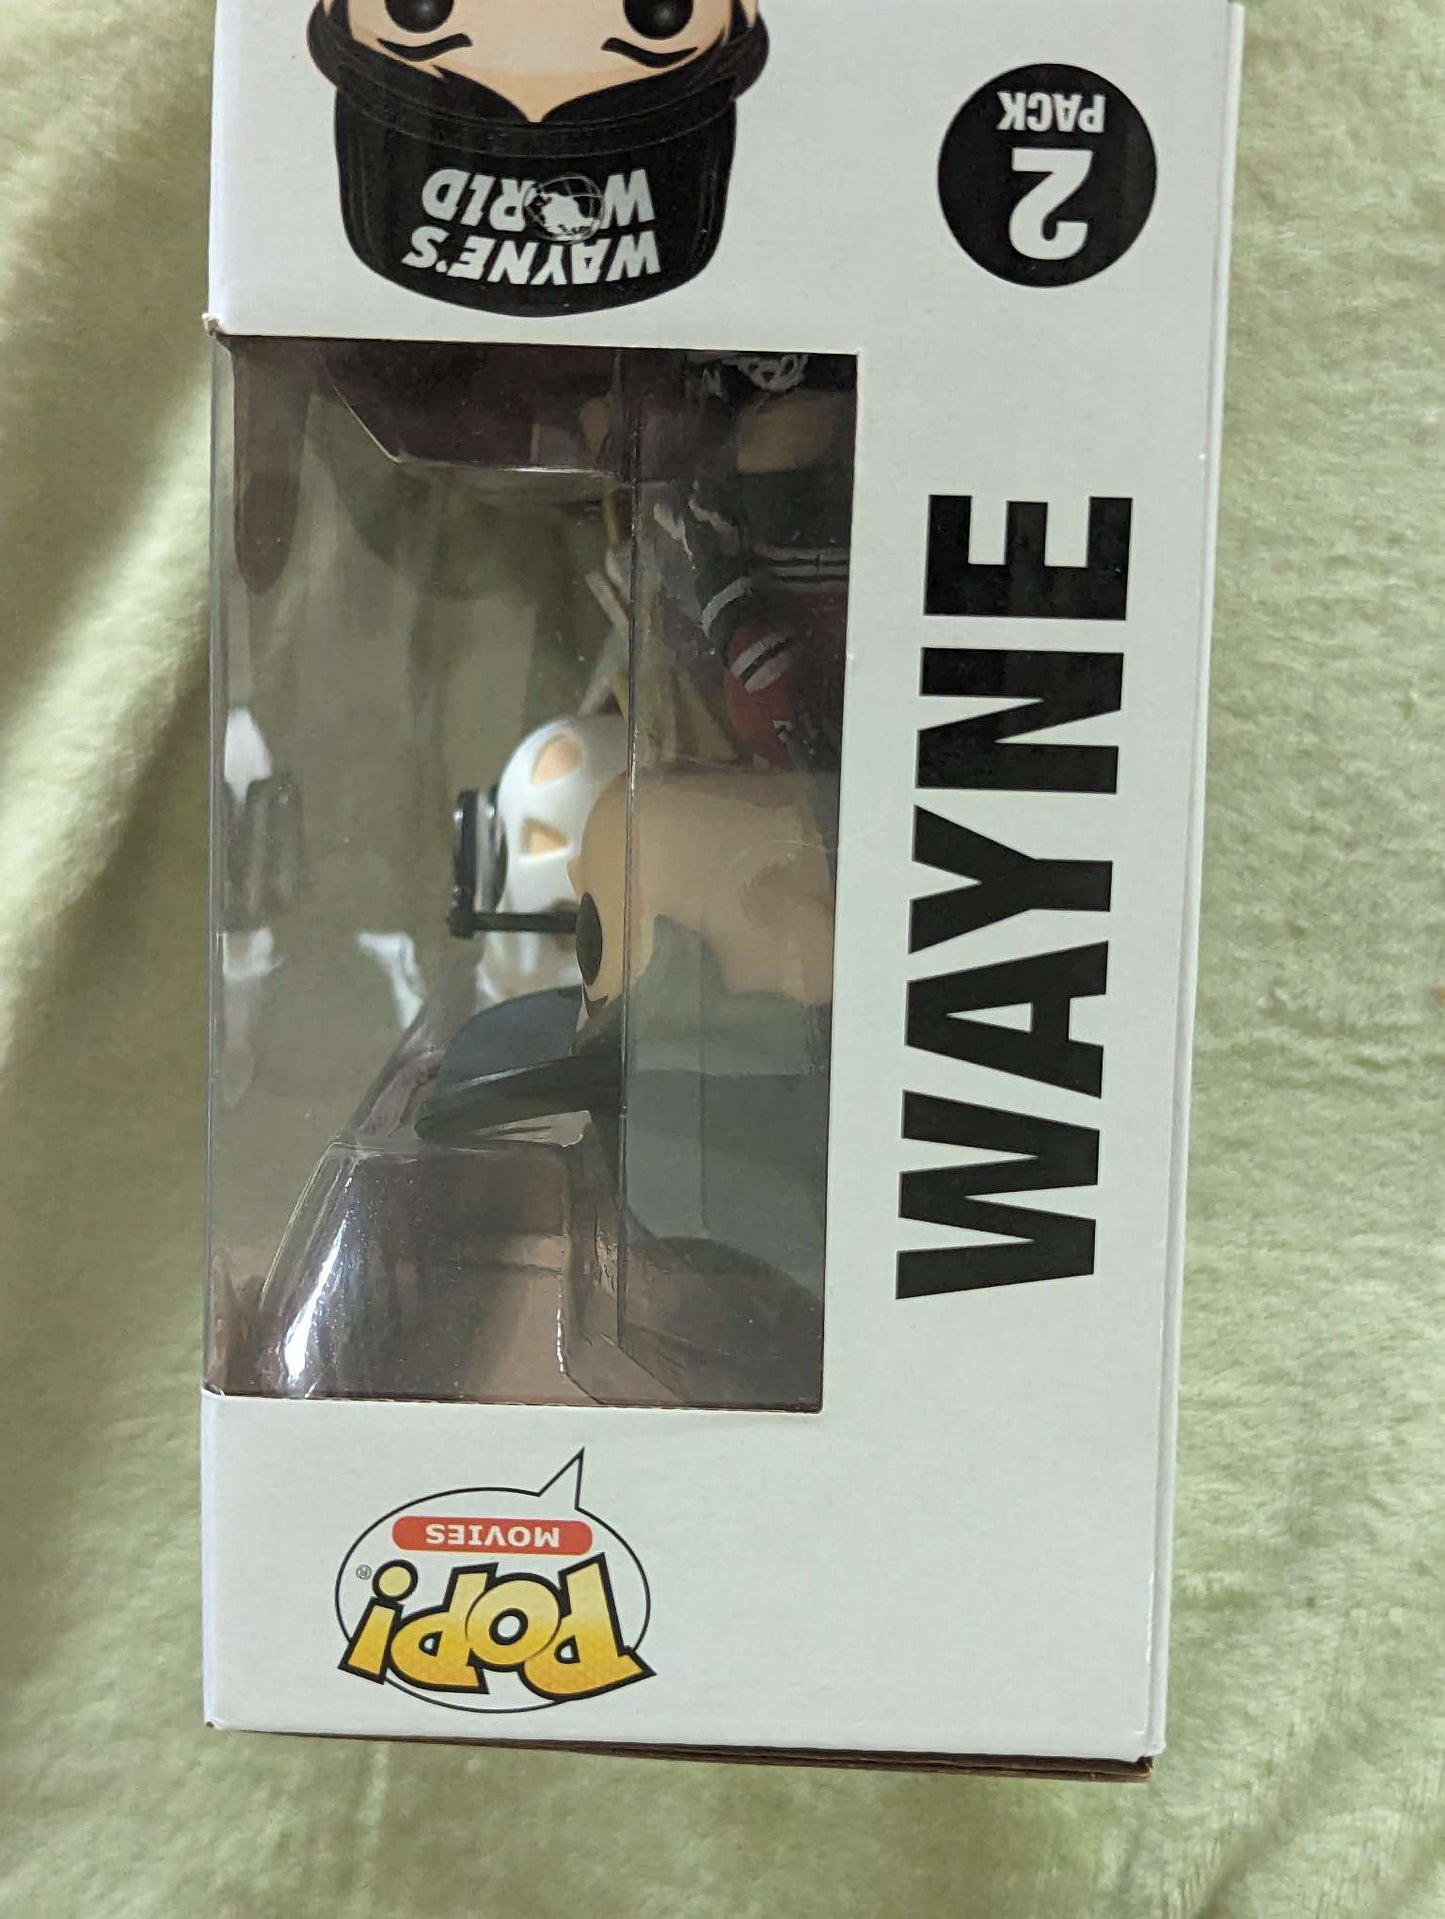 Funko created 'Wayne's World' POP! figurines of Wayne and Garth playing  hockey